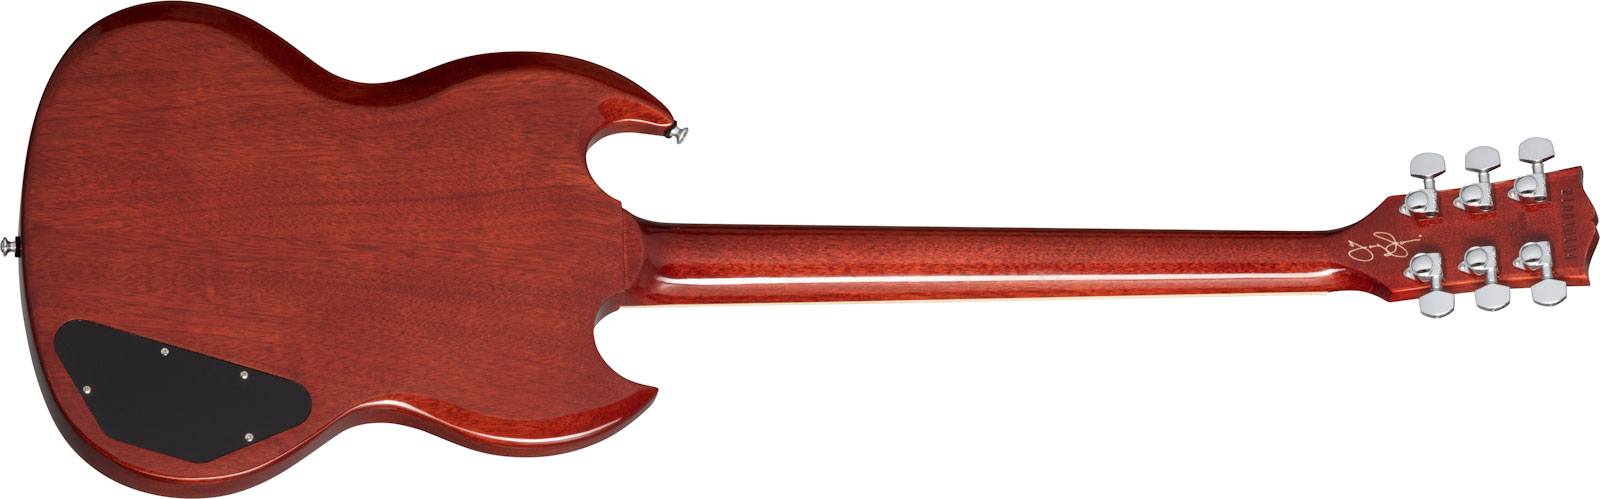 Gibson Sg Tony Iommi Special Lh Gaucher Signature 2p90 Ht Rw - Vintage Cherry - Guitarra electrica para zurdos - Variation 1